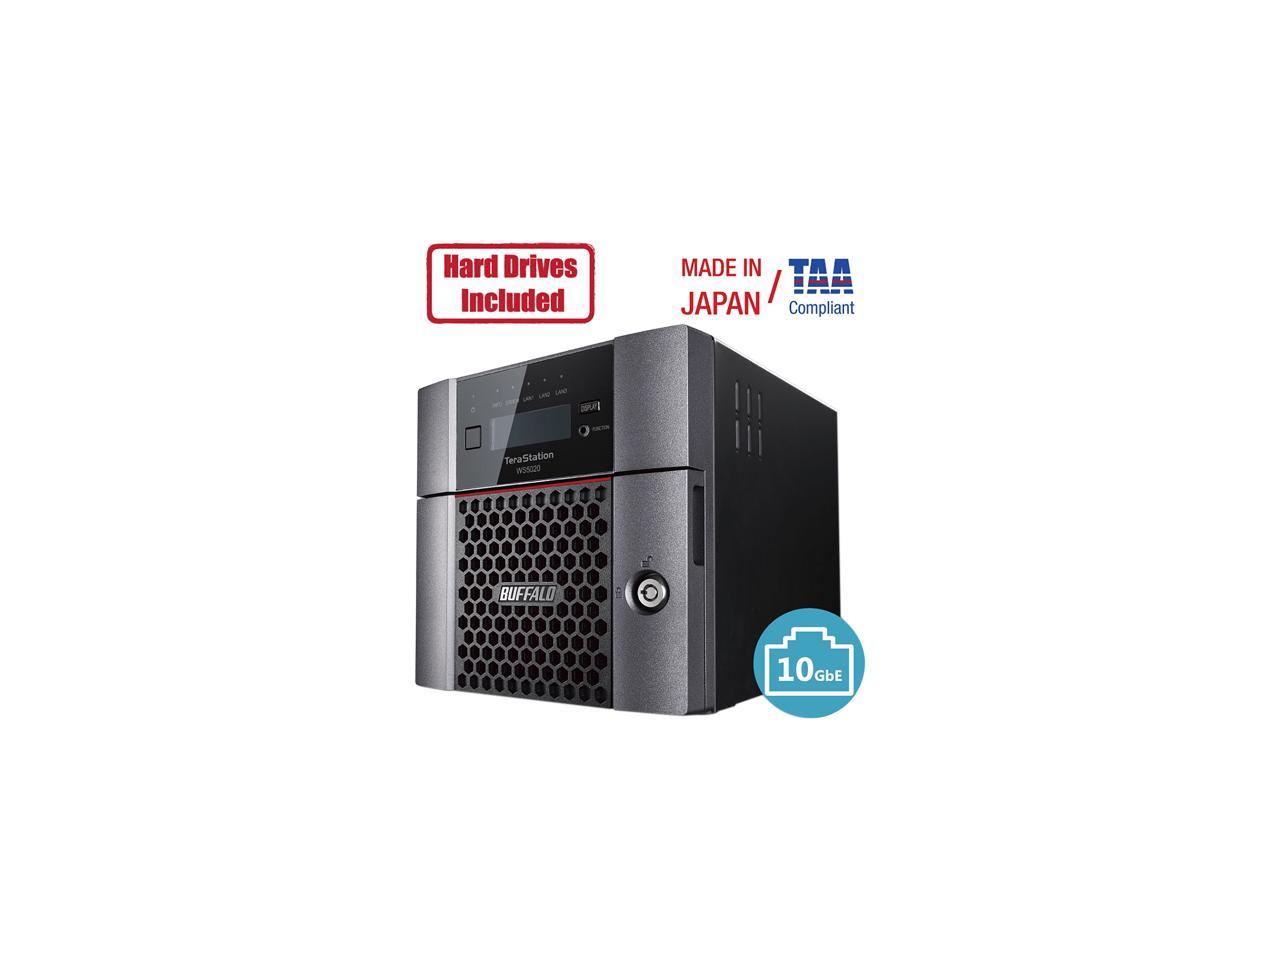 Buffalo TeraStation WS5220DN Windows Server IoT 2019 Standard 8TB 2 Bay Desktop (2x2TB) NAS Hard Drives Included RAID iSCSI